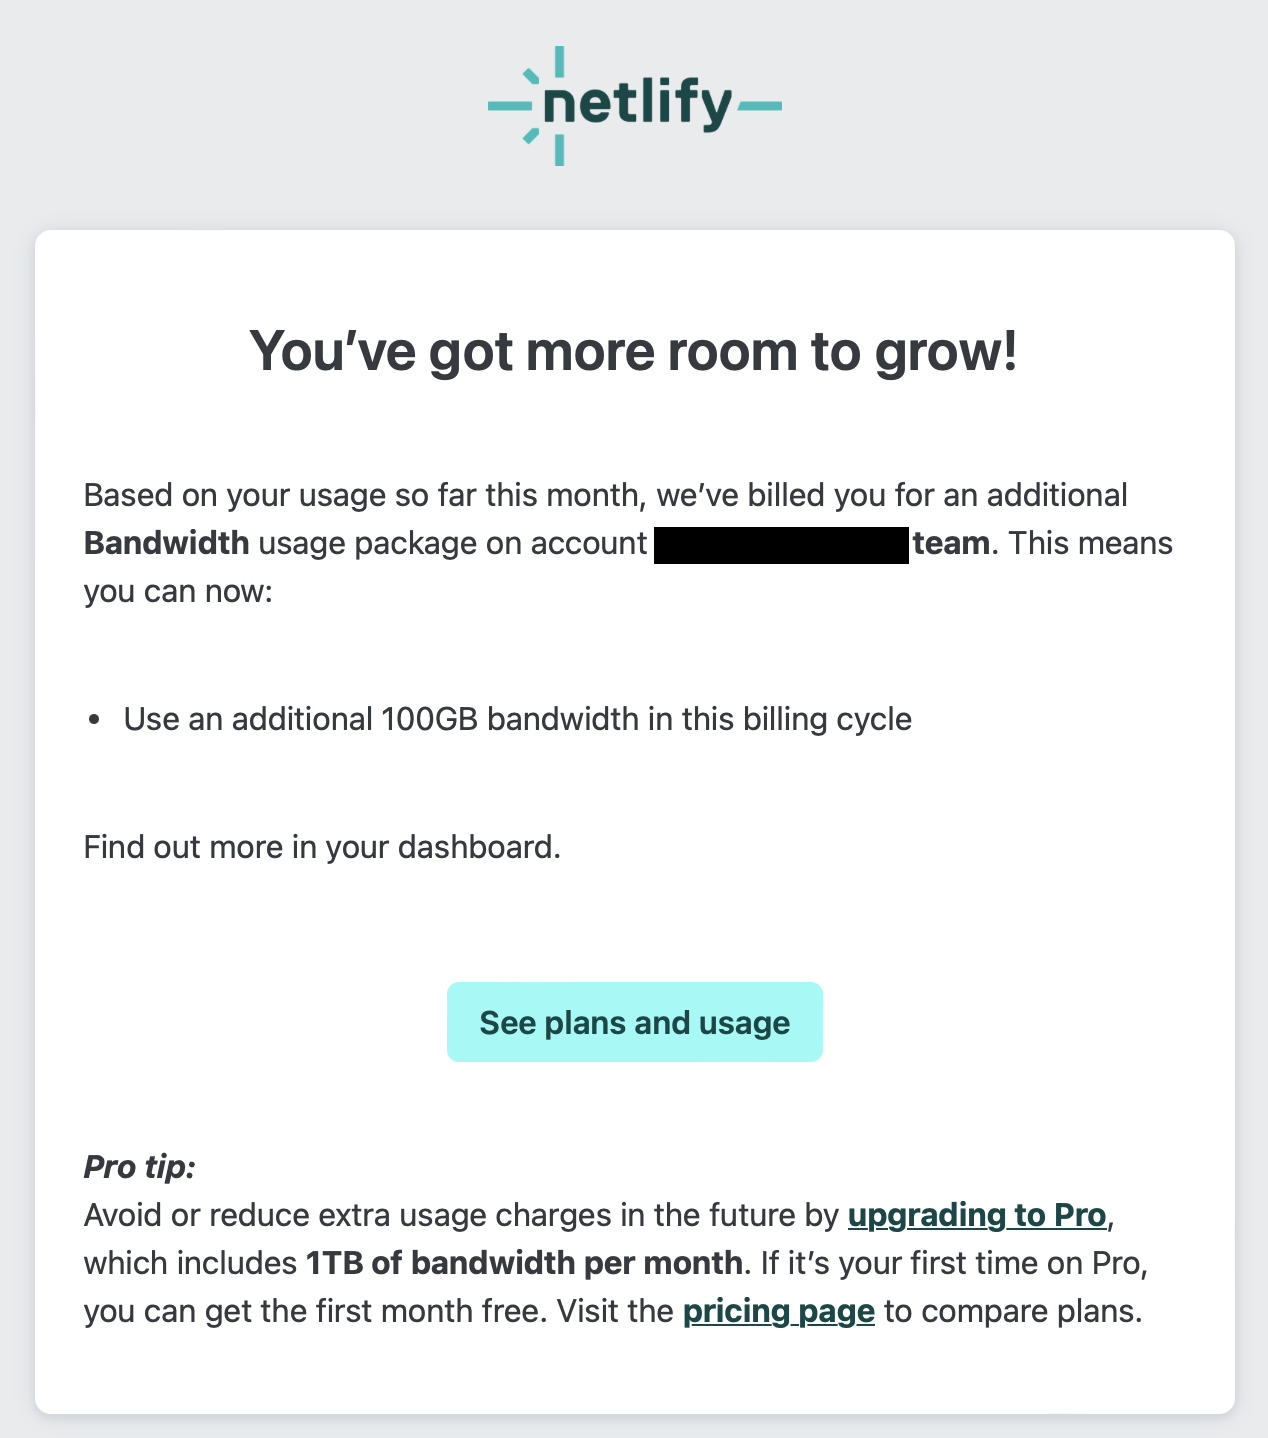 Netlify email screenshot